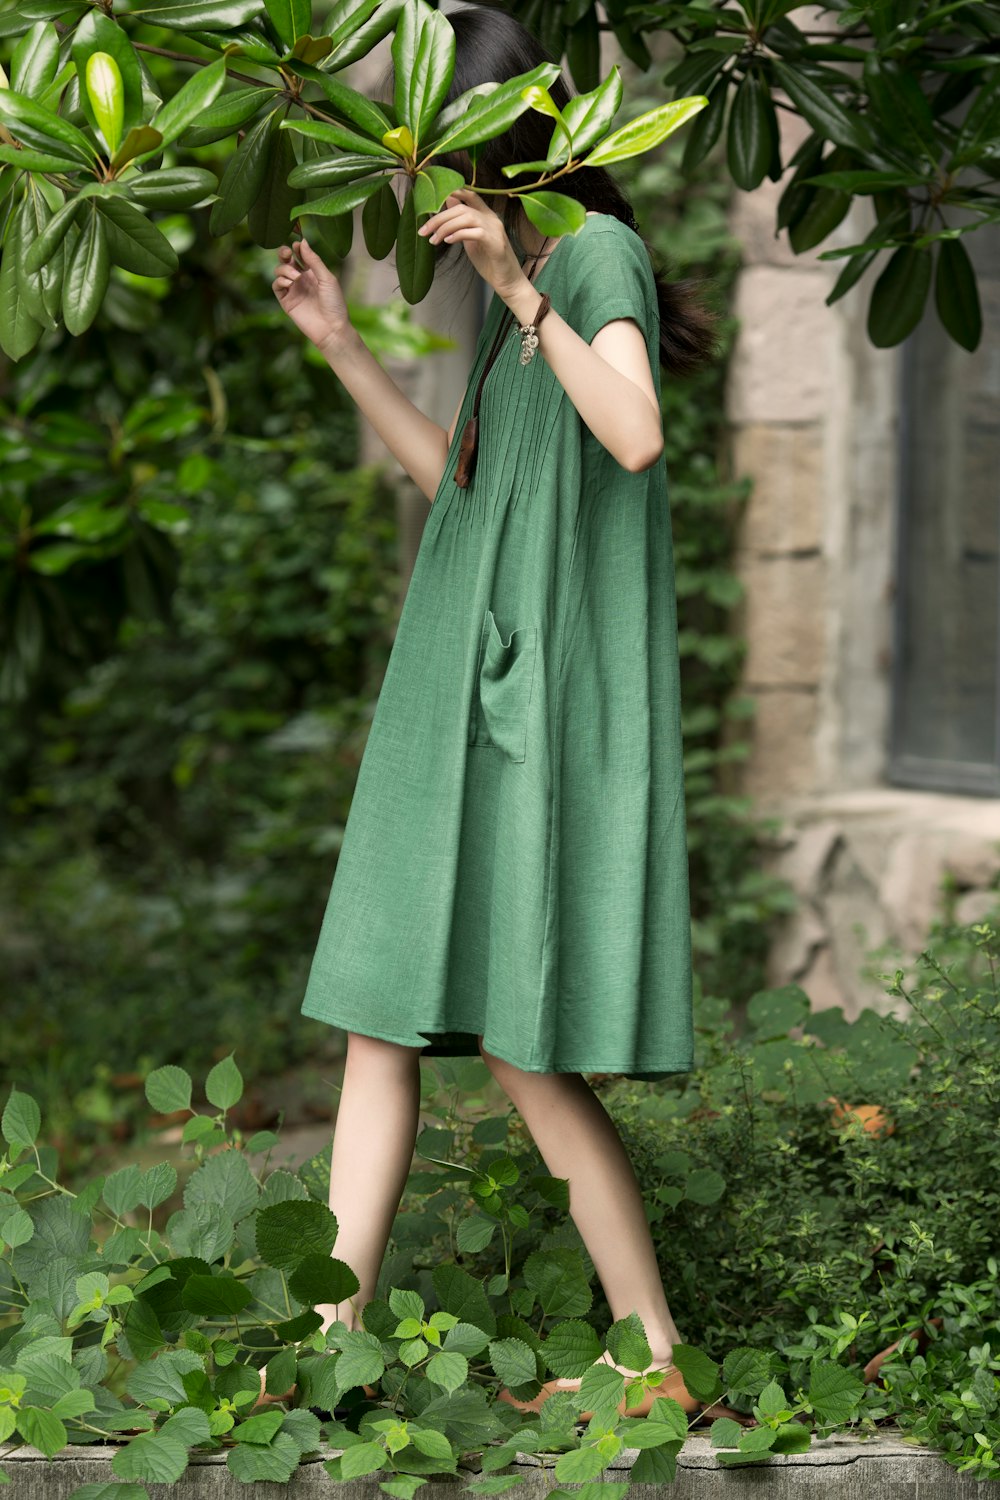 a woman in a green dress standing in a garden